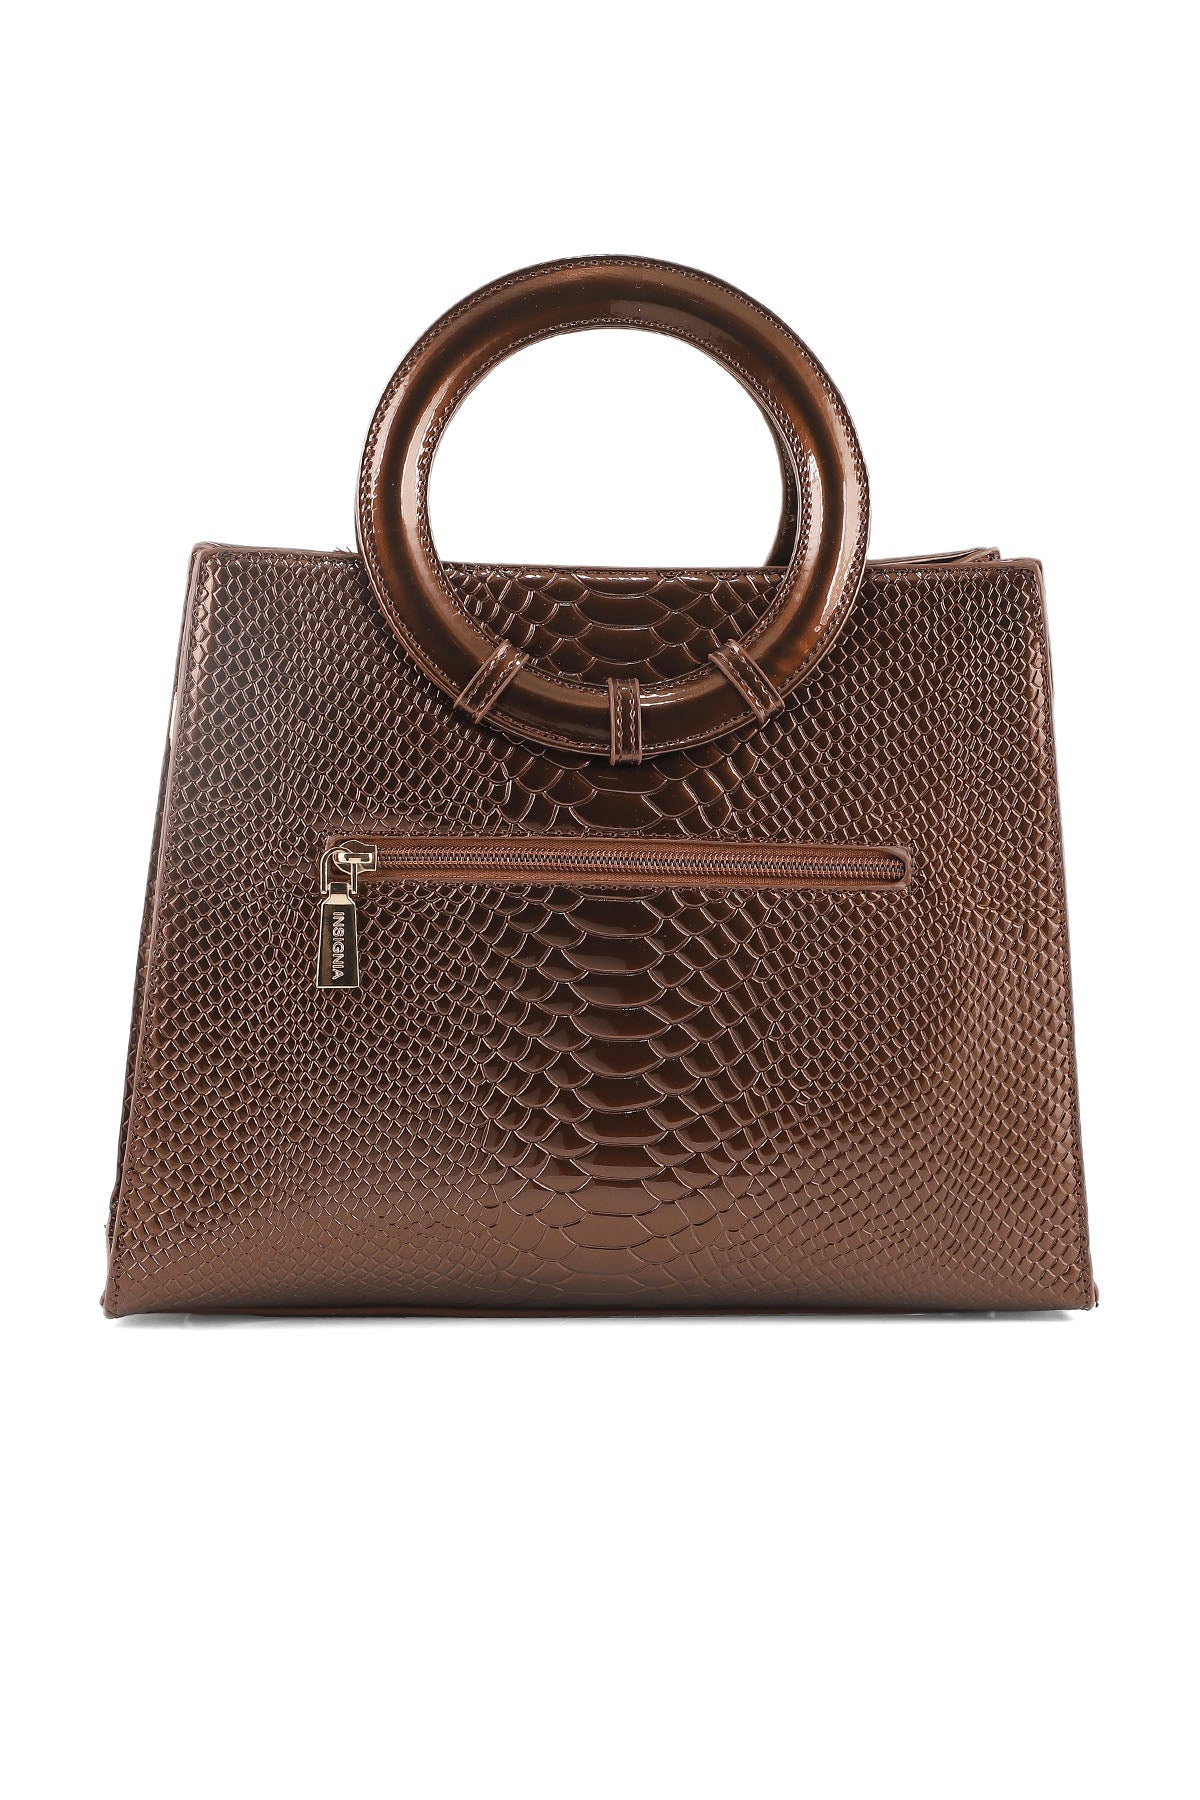 Top Handle Hand Bags B14996-Brown